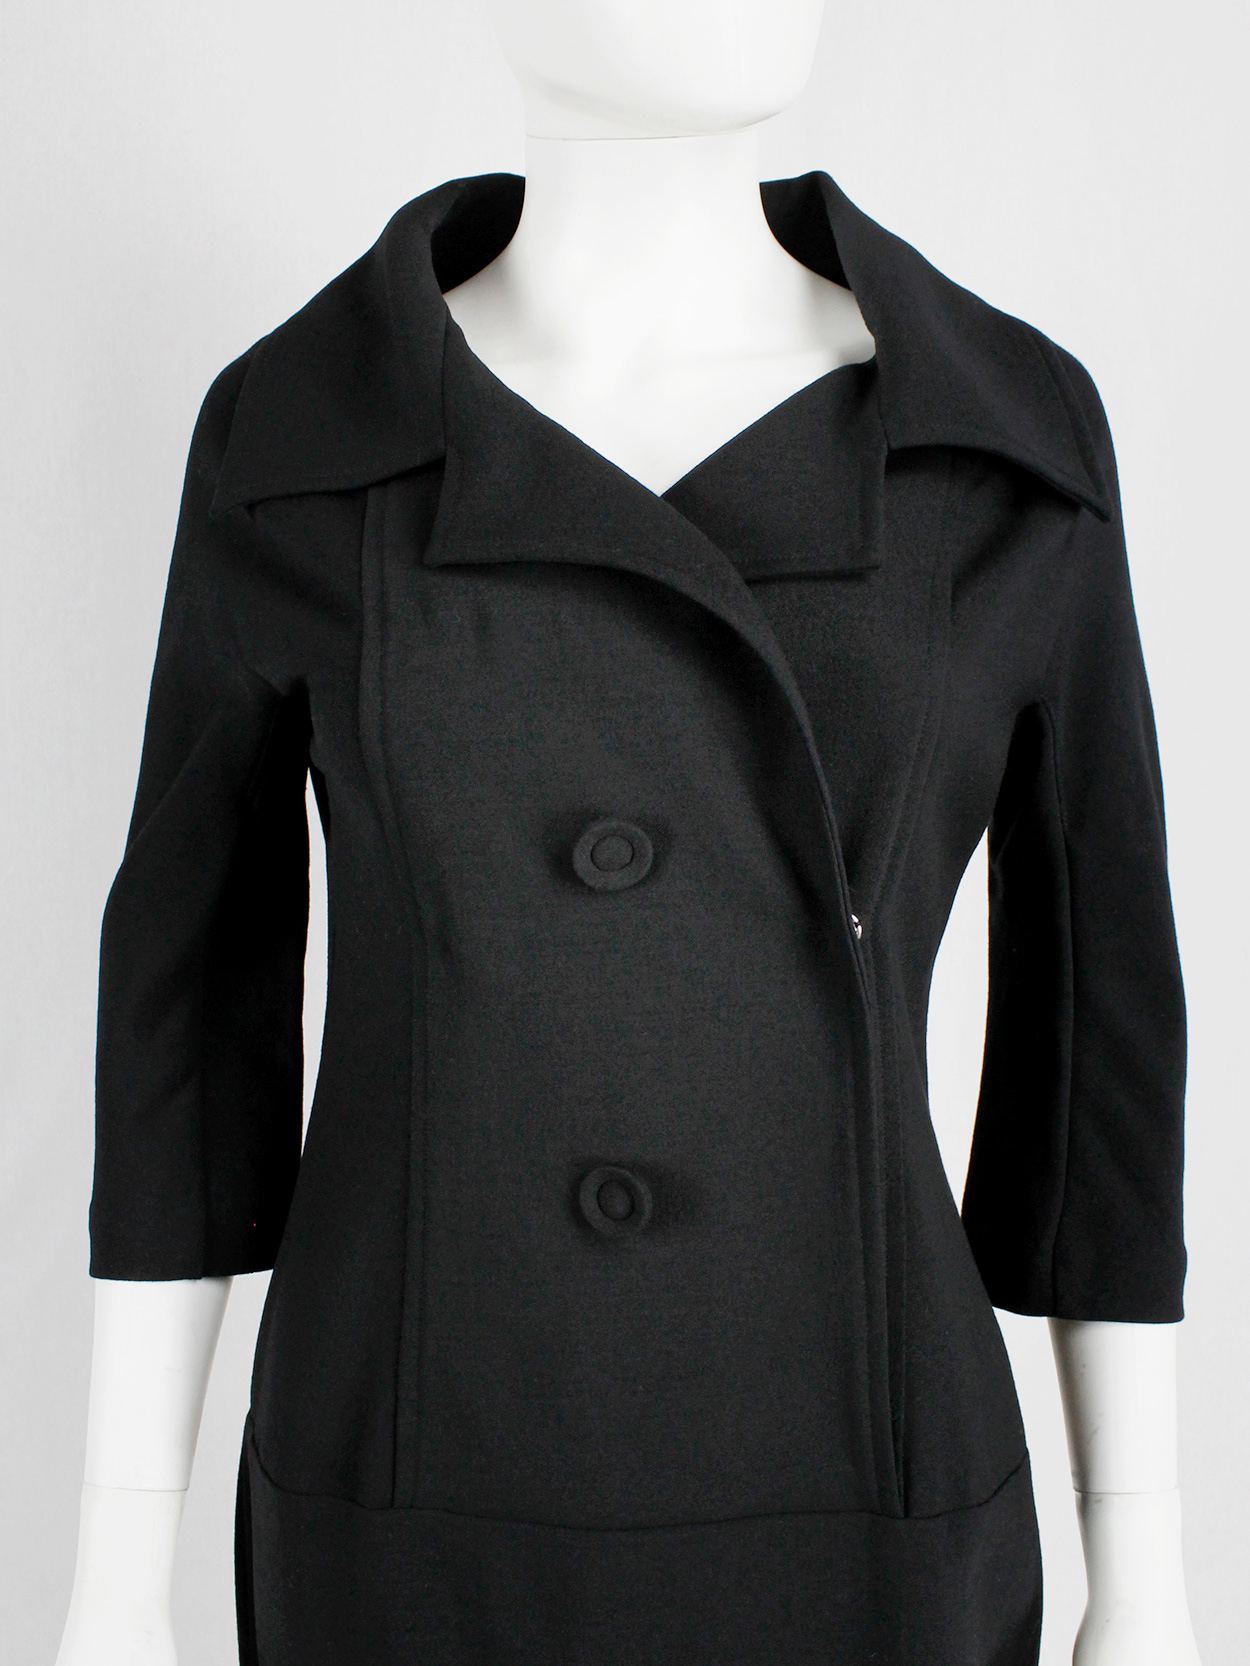 Yohji Yamamoto black twinset-inspired dress with fabric covered buttons ...